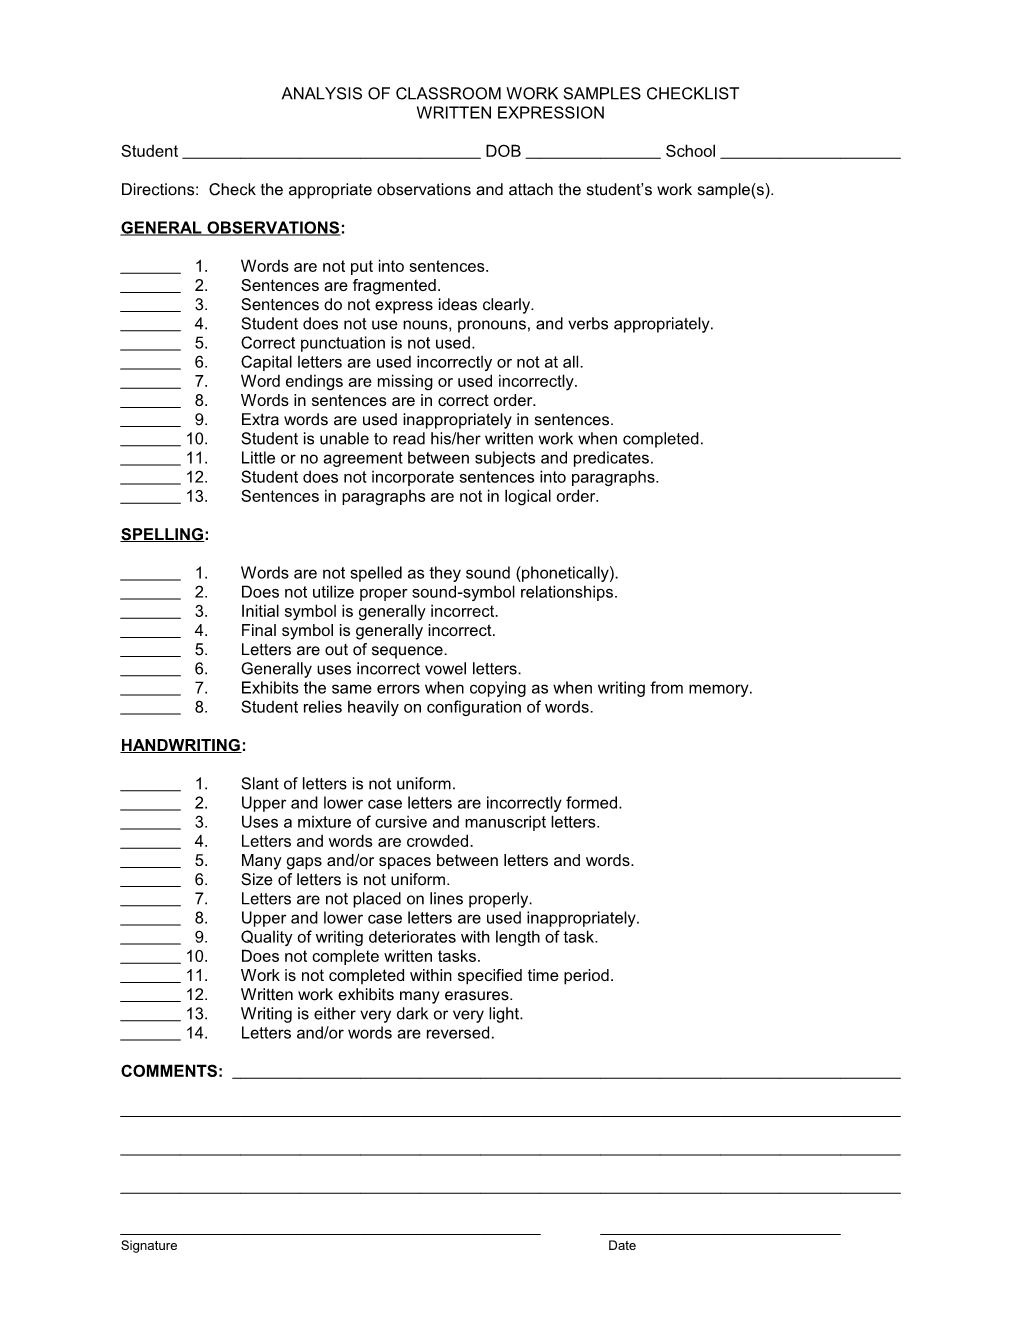 Analysis of Classroom Work Samples Checklist